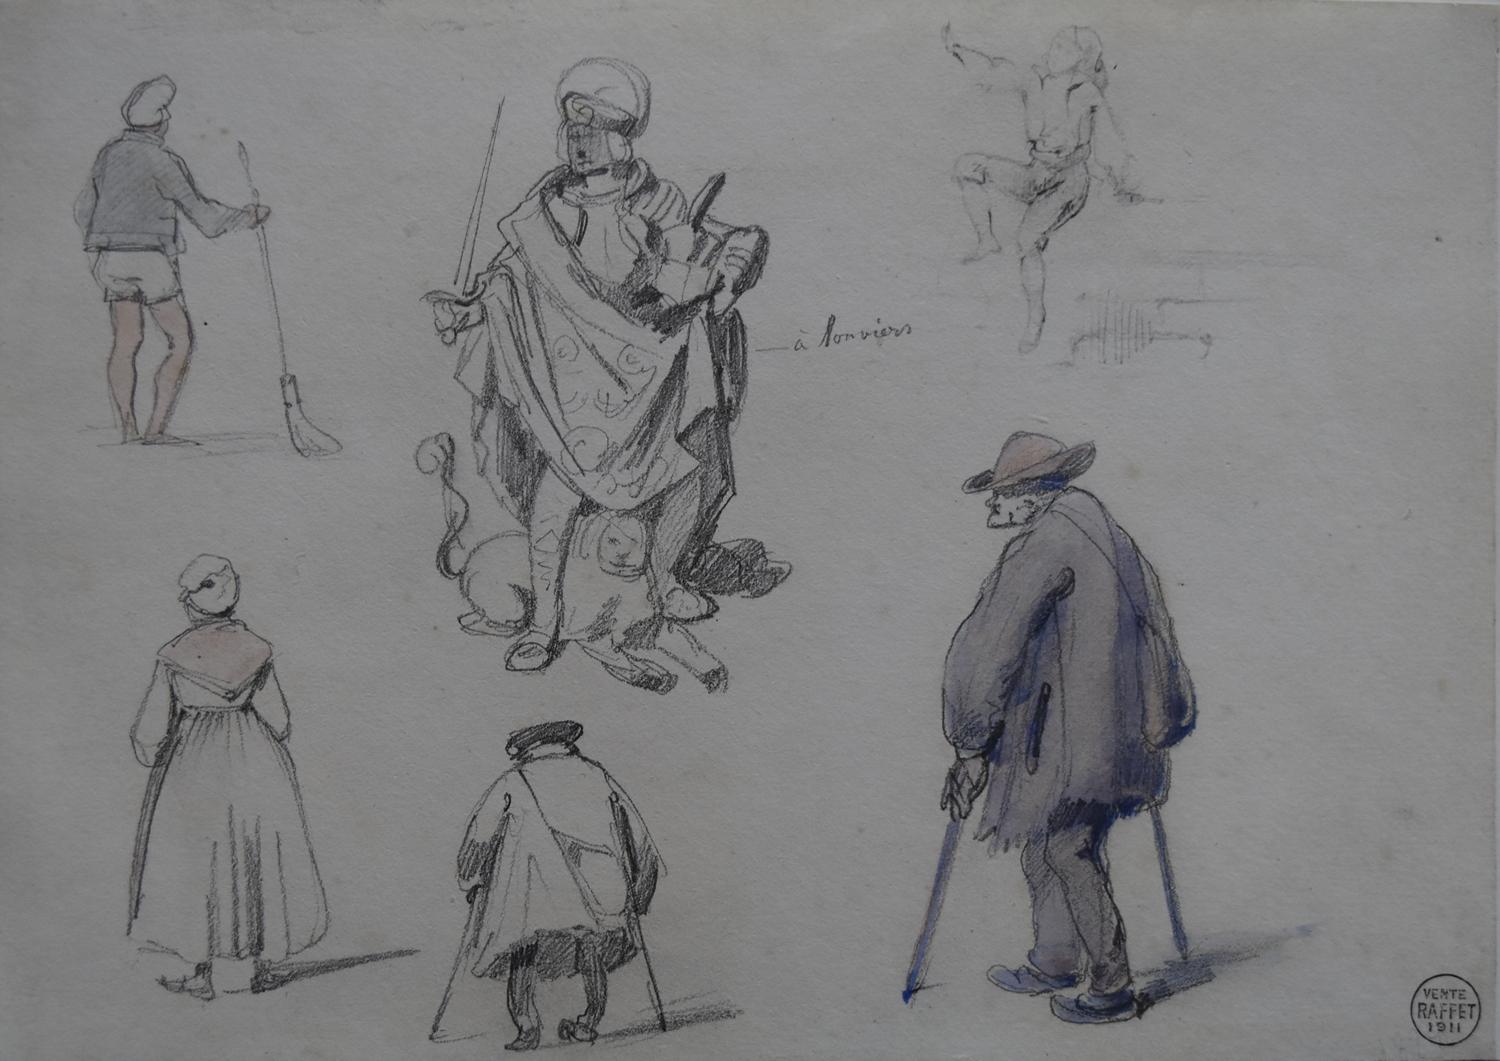 Denis Auguste Raffet (1804-1860) Studies of characters, drawing and watercolor